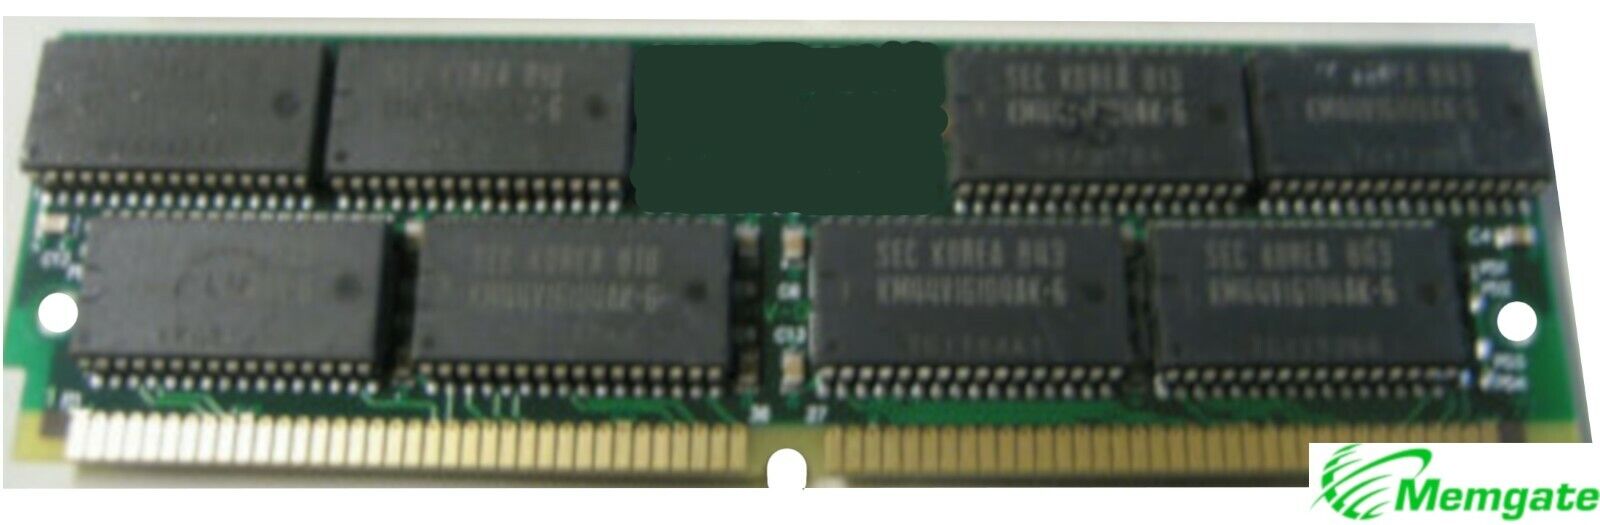 64MB EDO 72 Pin SIMM Memory Ram For Amiga 1200 with DKB Cobra Processor card